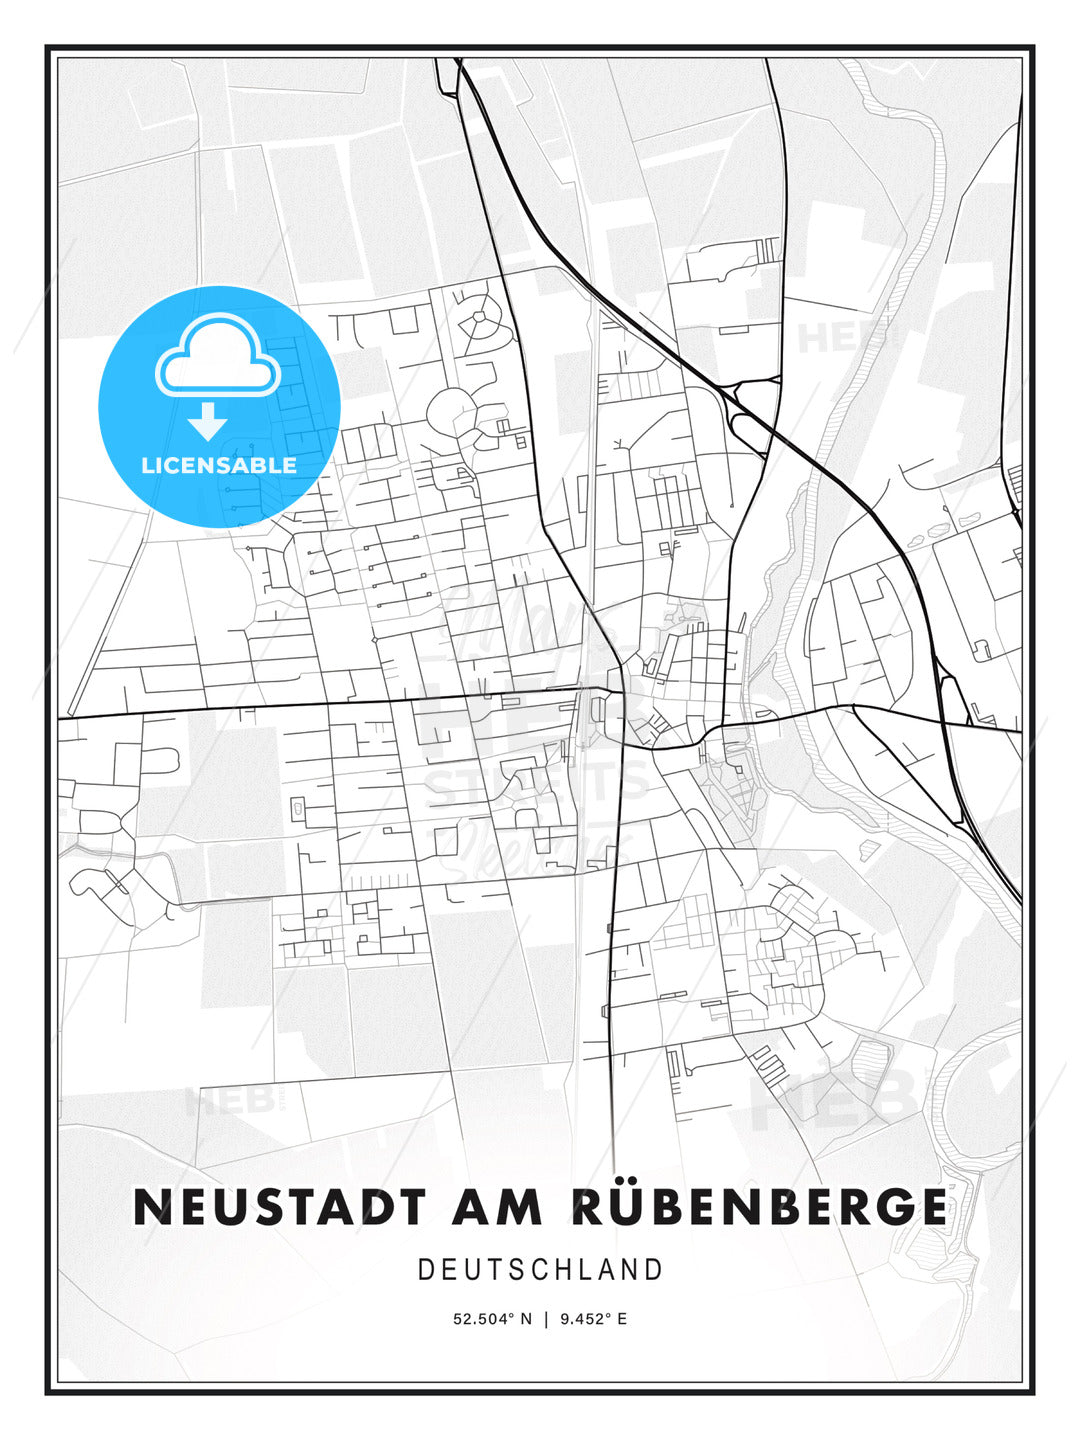 NEUSTADT AM RÜBENBERGE / Neustadt am Rubenberge, Germany, Modern Print Template in Various Formats - HEBSTREITS Sketches